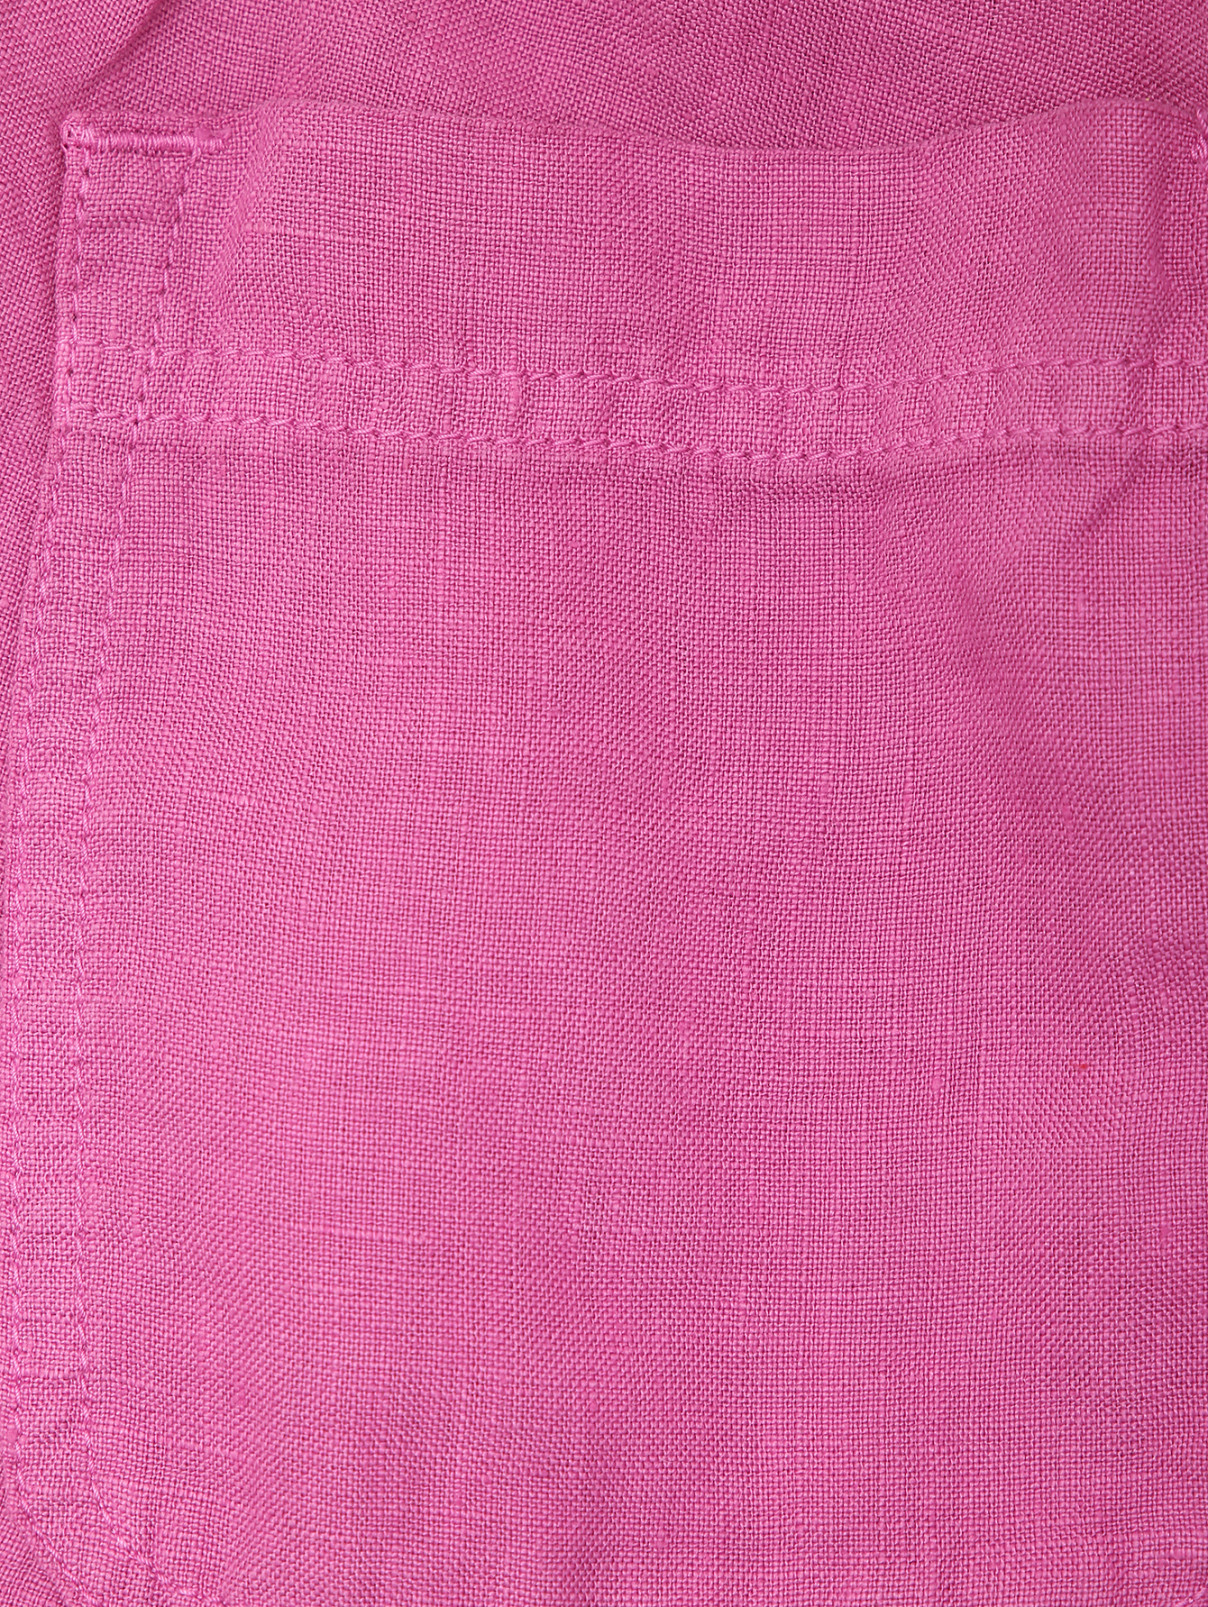 Брюки изо льна на резинке Il Gufo  –  Деталь1  – Цвет:  Розовый